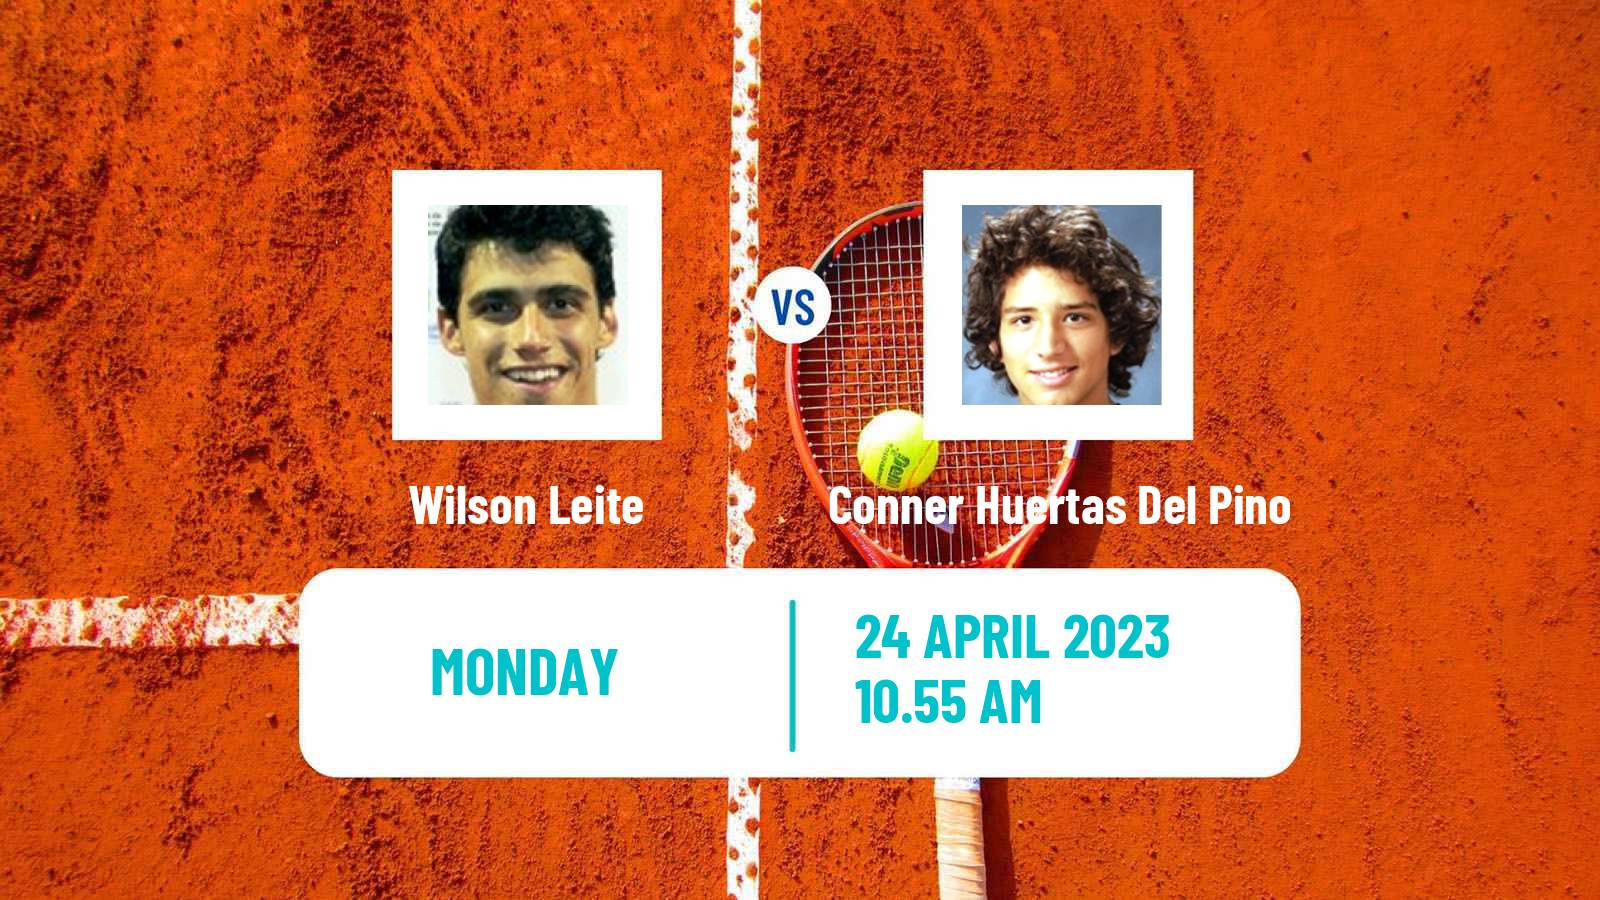 Tennis ATP Challenger Wilson Leite - Conner Huertas Del Pino